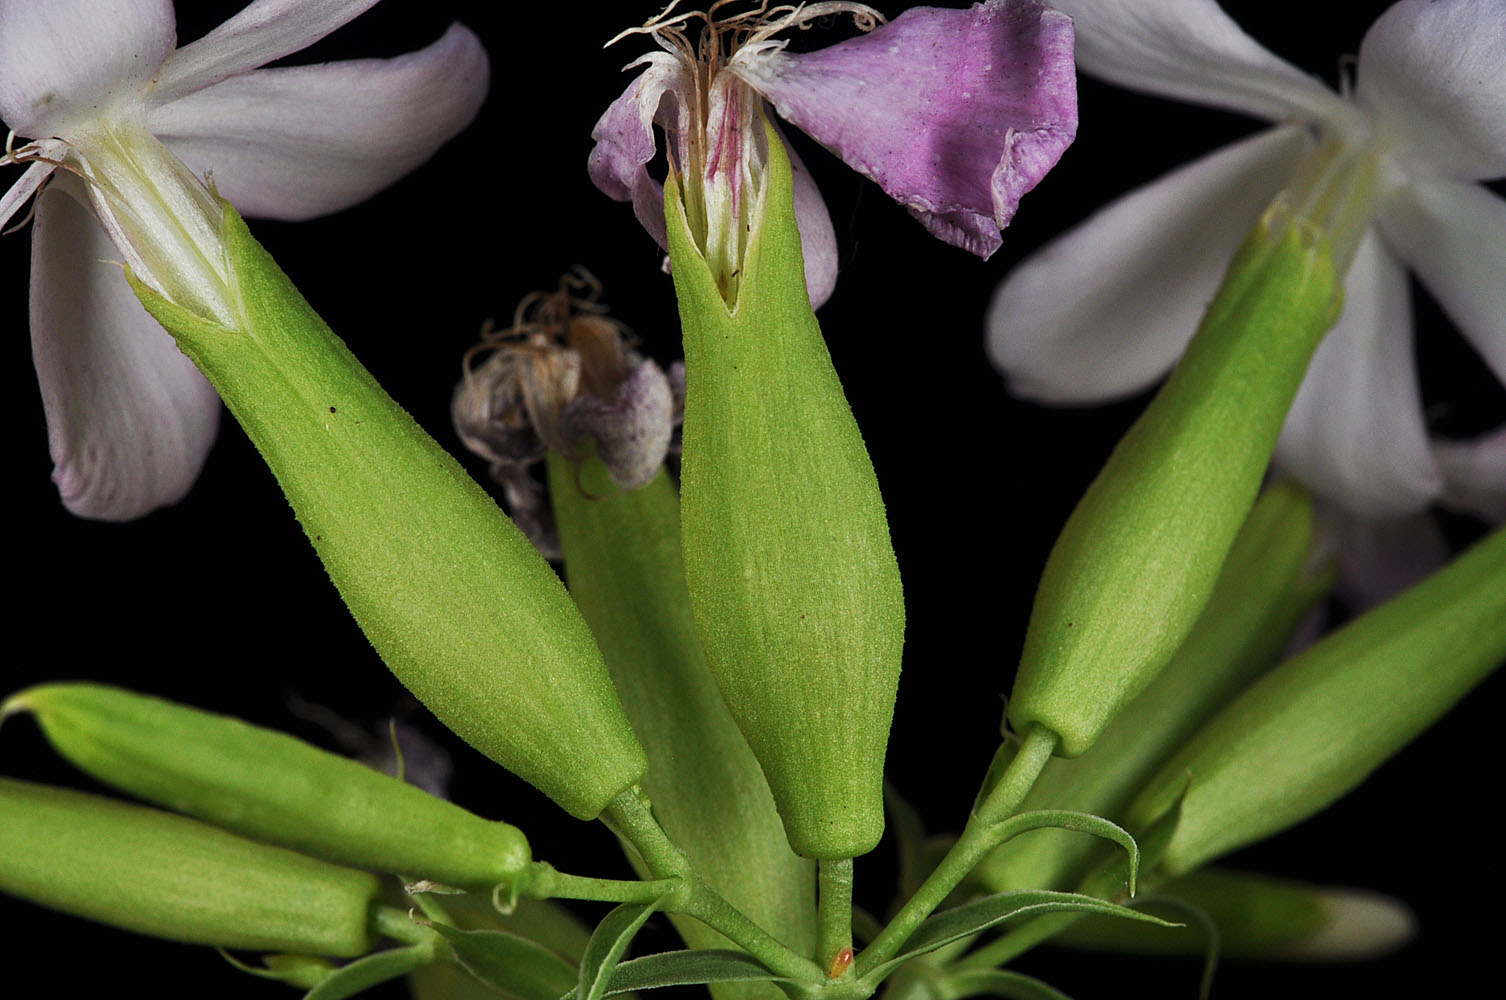 Flora of Eastern Washington Image: Saponaria officinalis